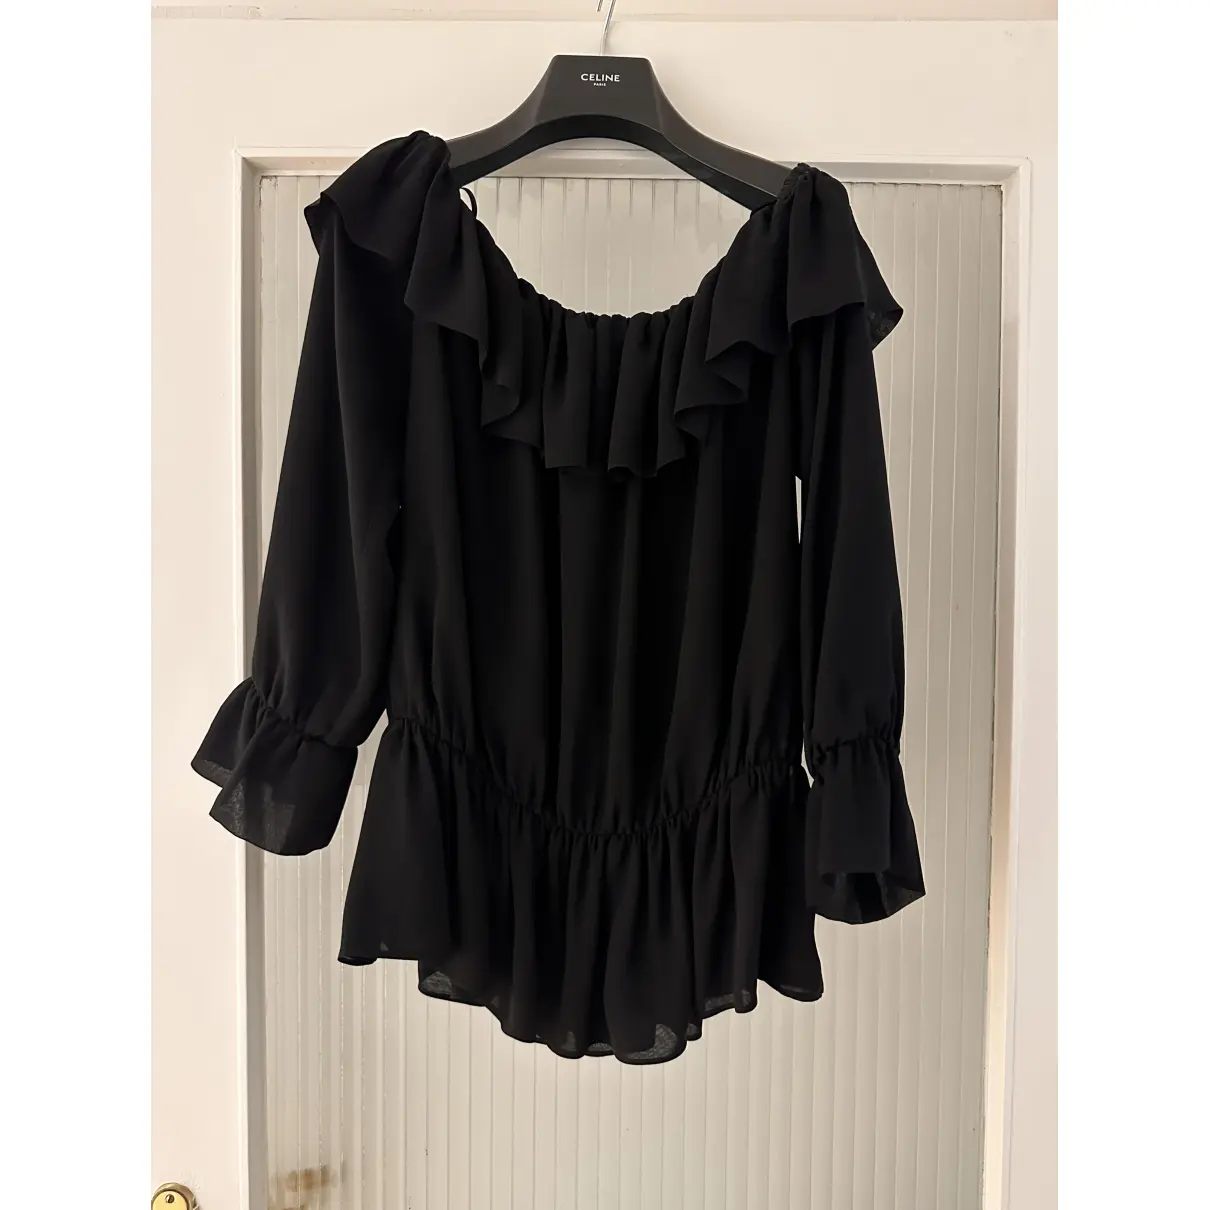 Buy Celine Silk blouse online